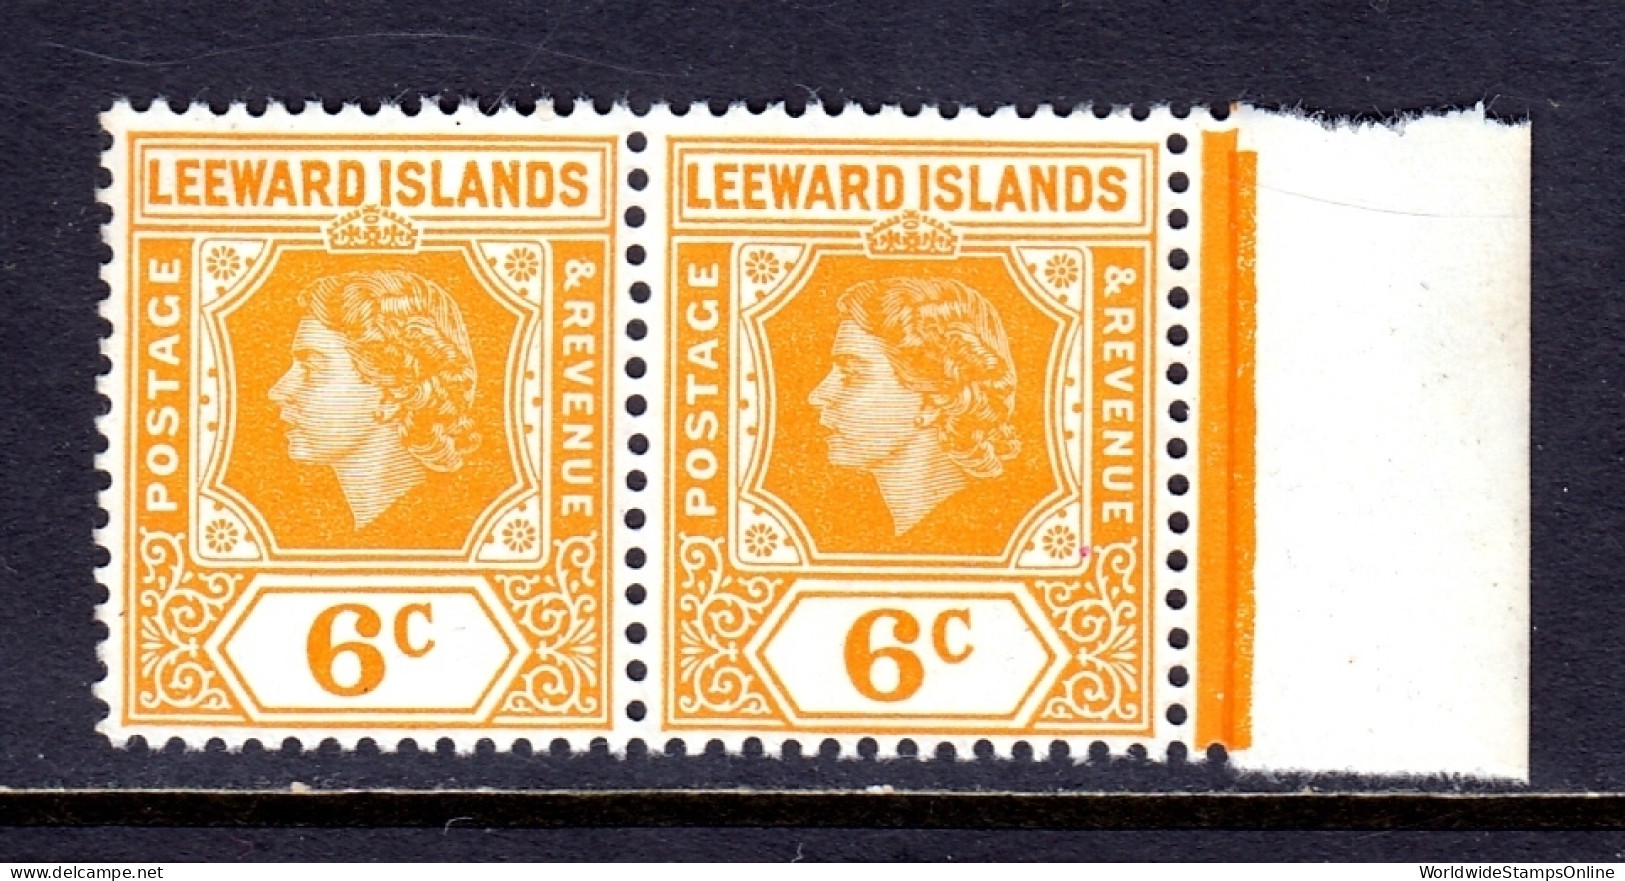 Leeward Islands - Scott #139 - MNH - Pair - SCV $4.50 - Leeward  Islands